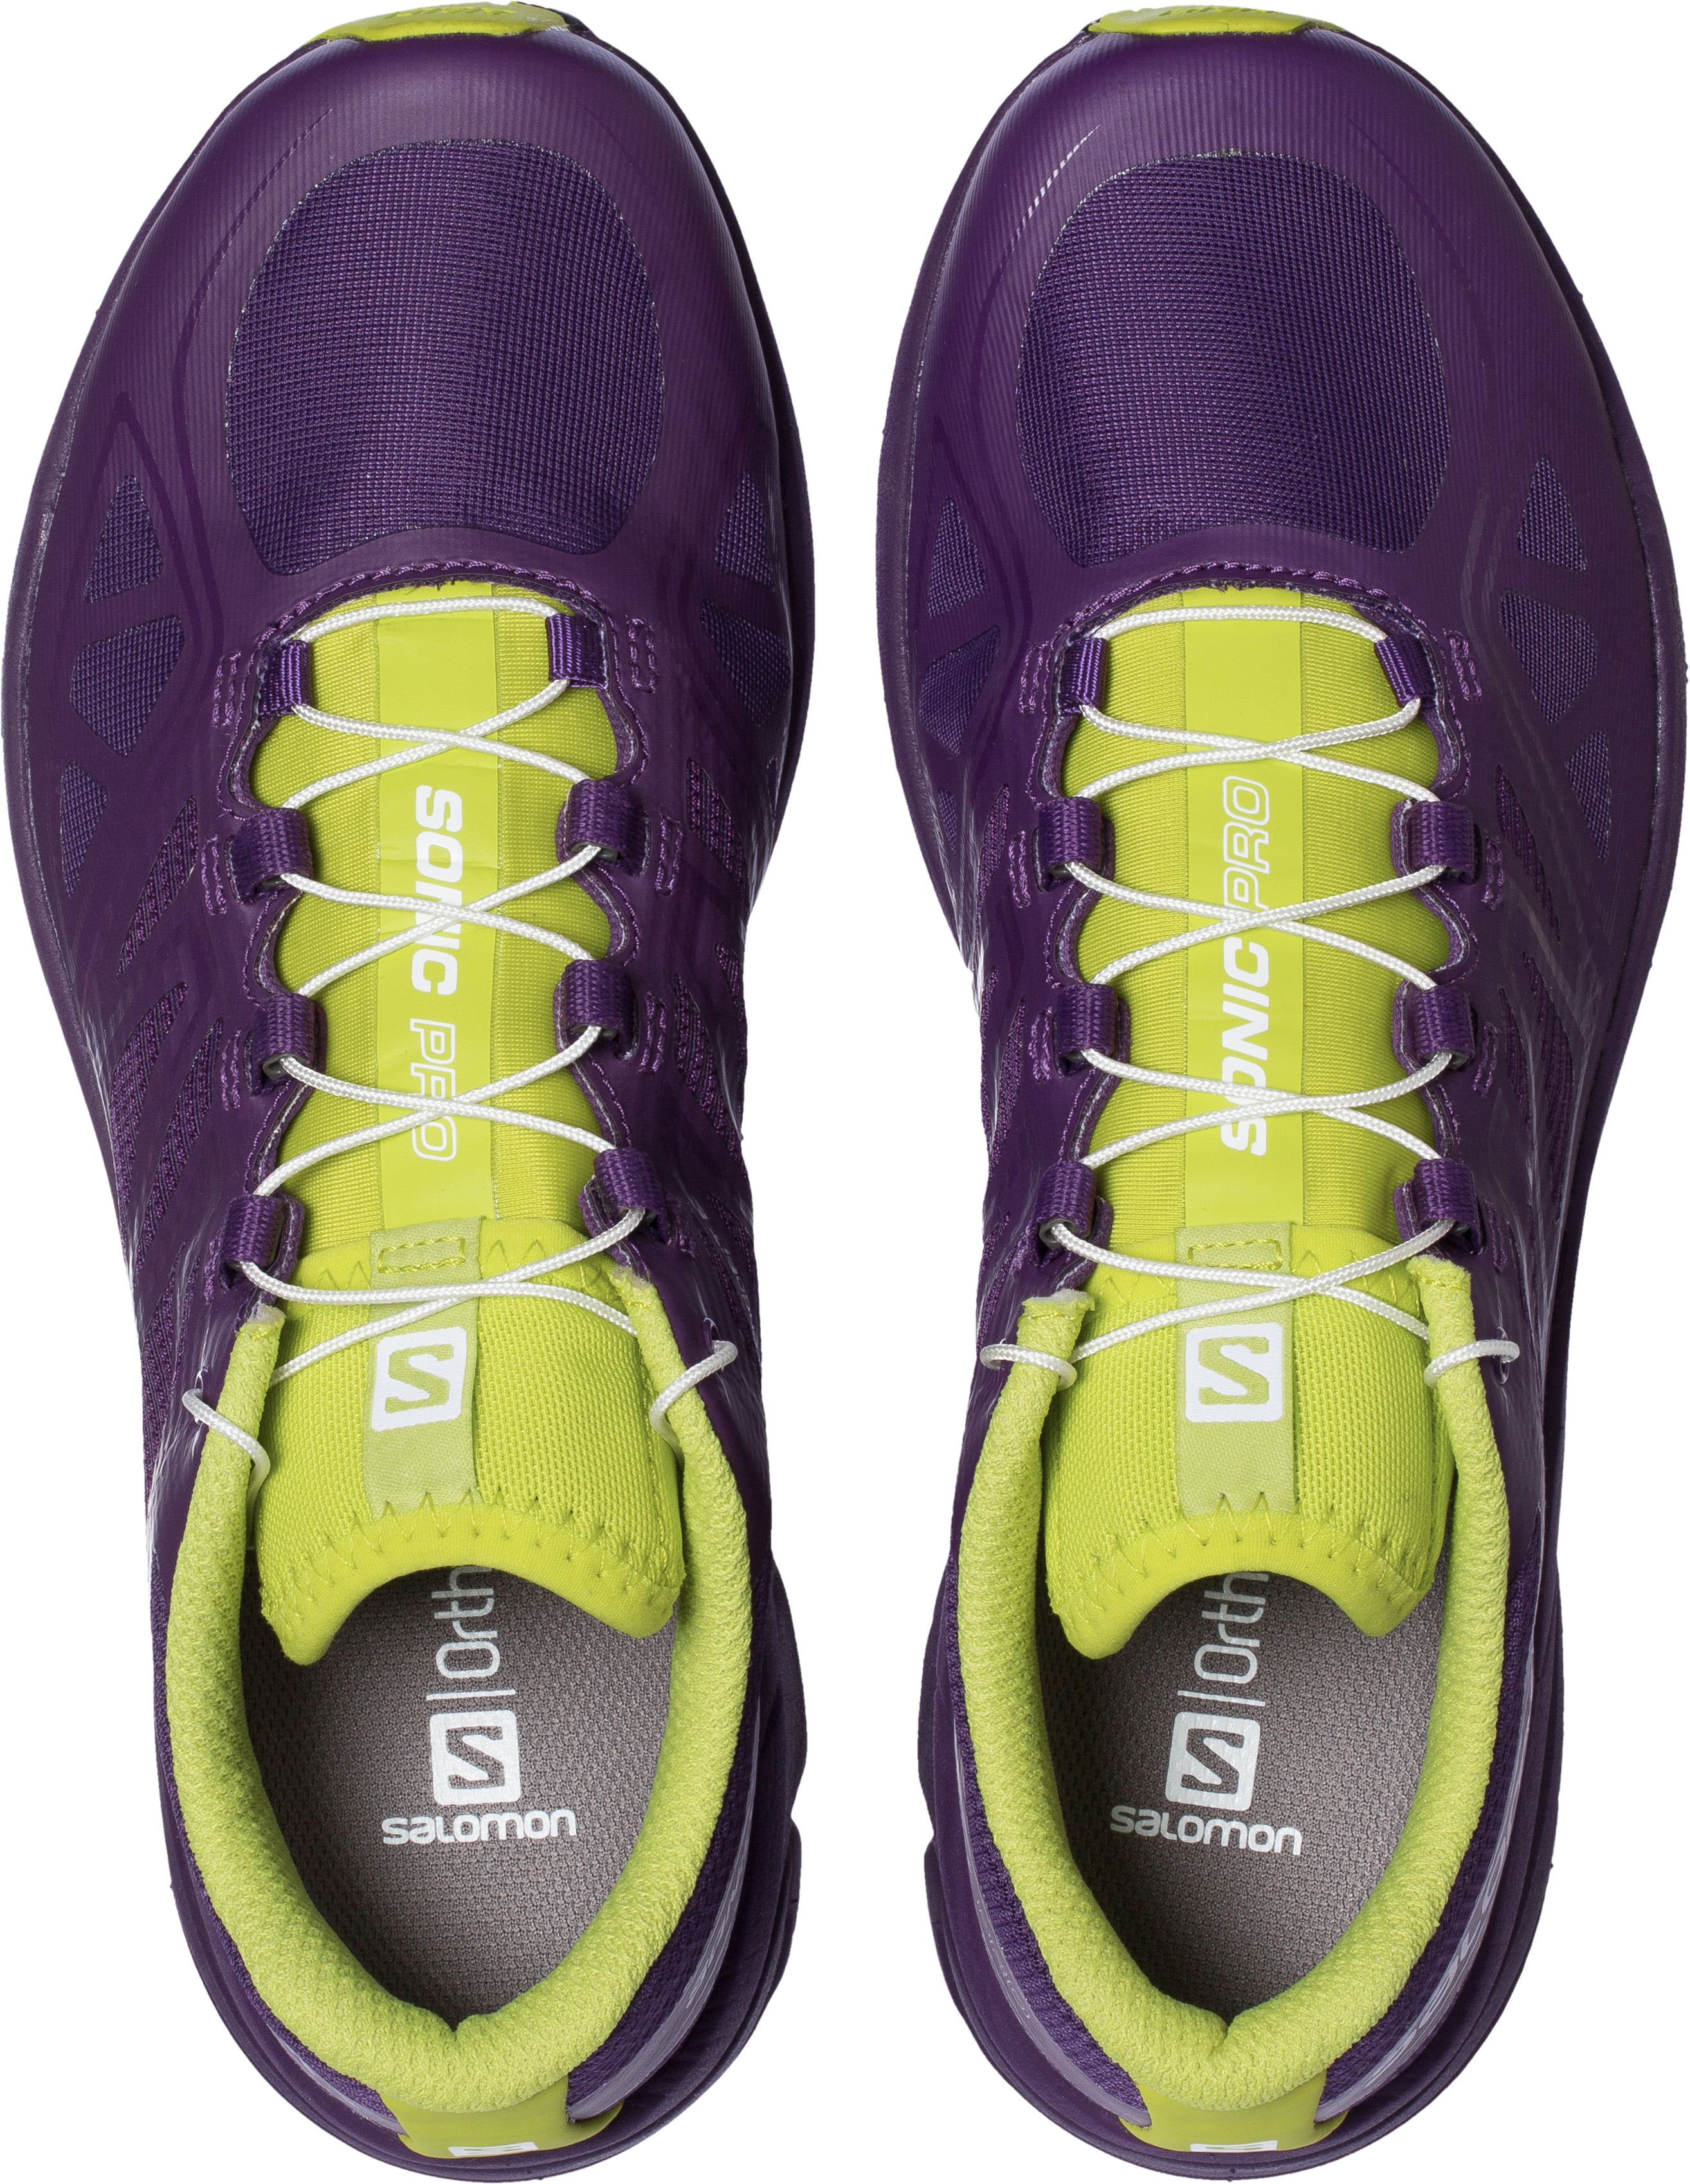 Running Shoes Salomon Sonic-Pro W,Profeel,Energy Cell,contagrip,379173,Purple 